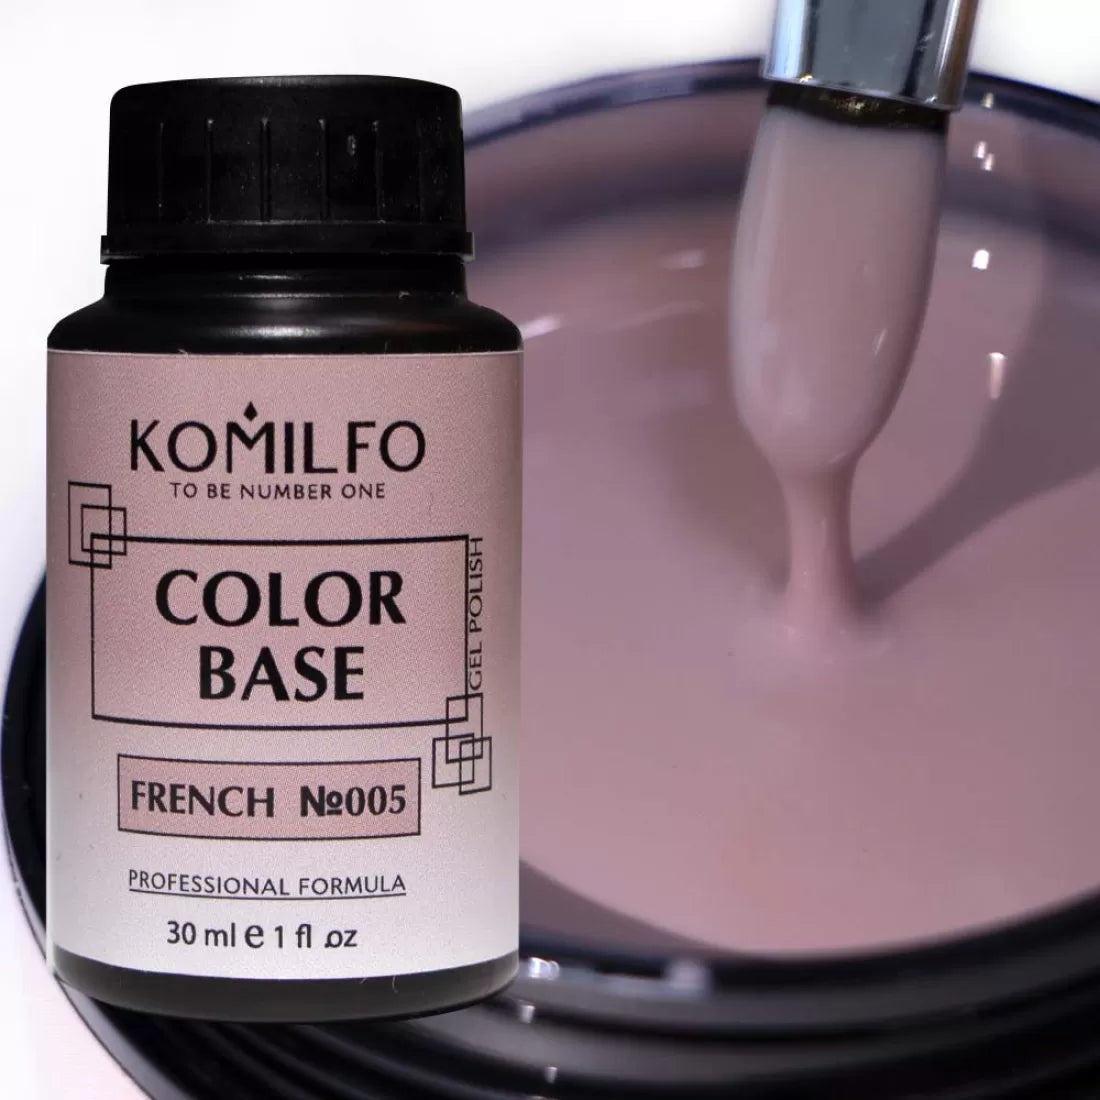 Komilfo Color Base French N005 30ml Barrel